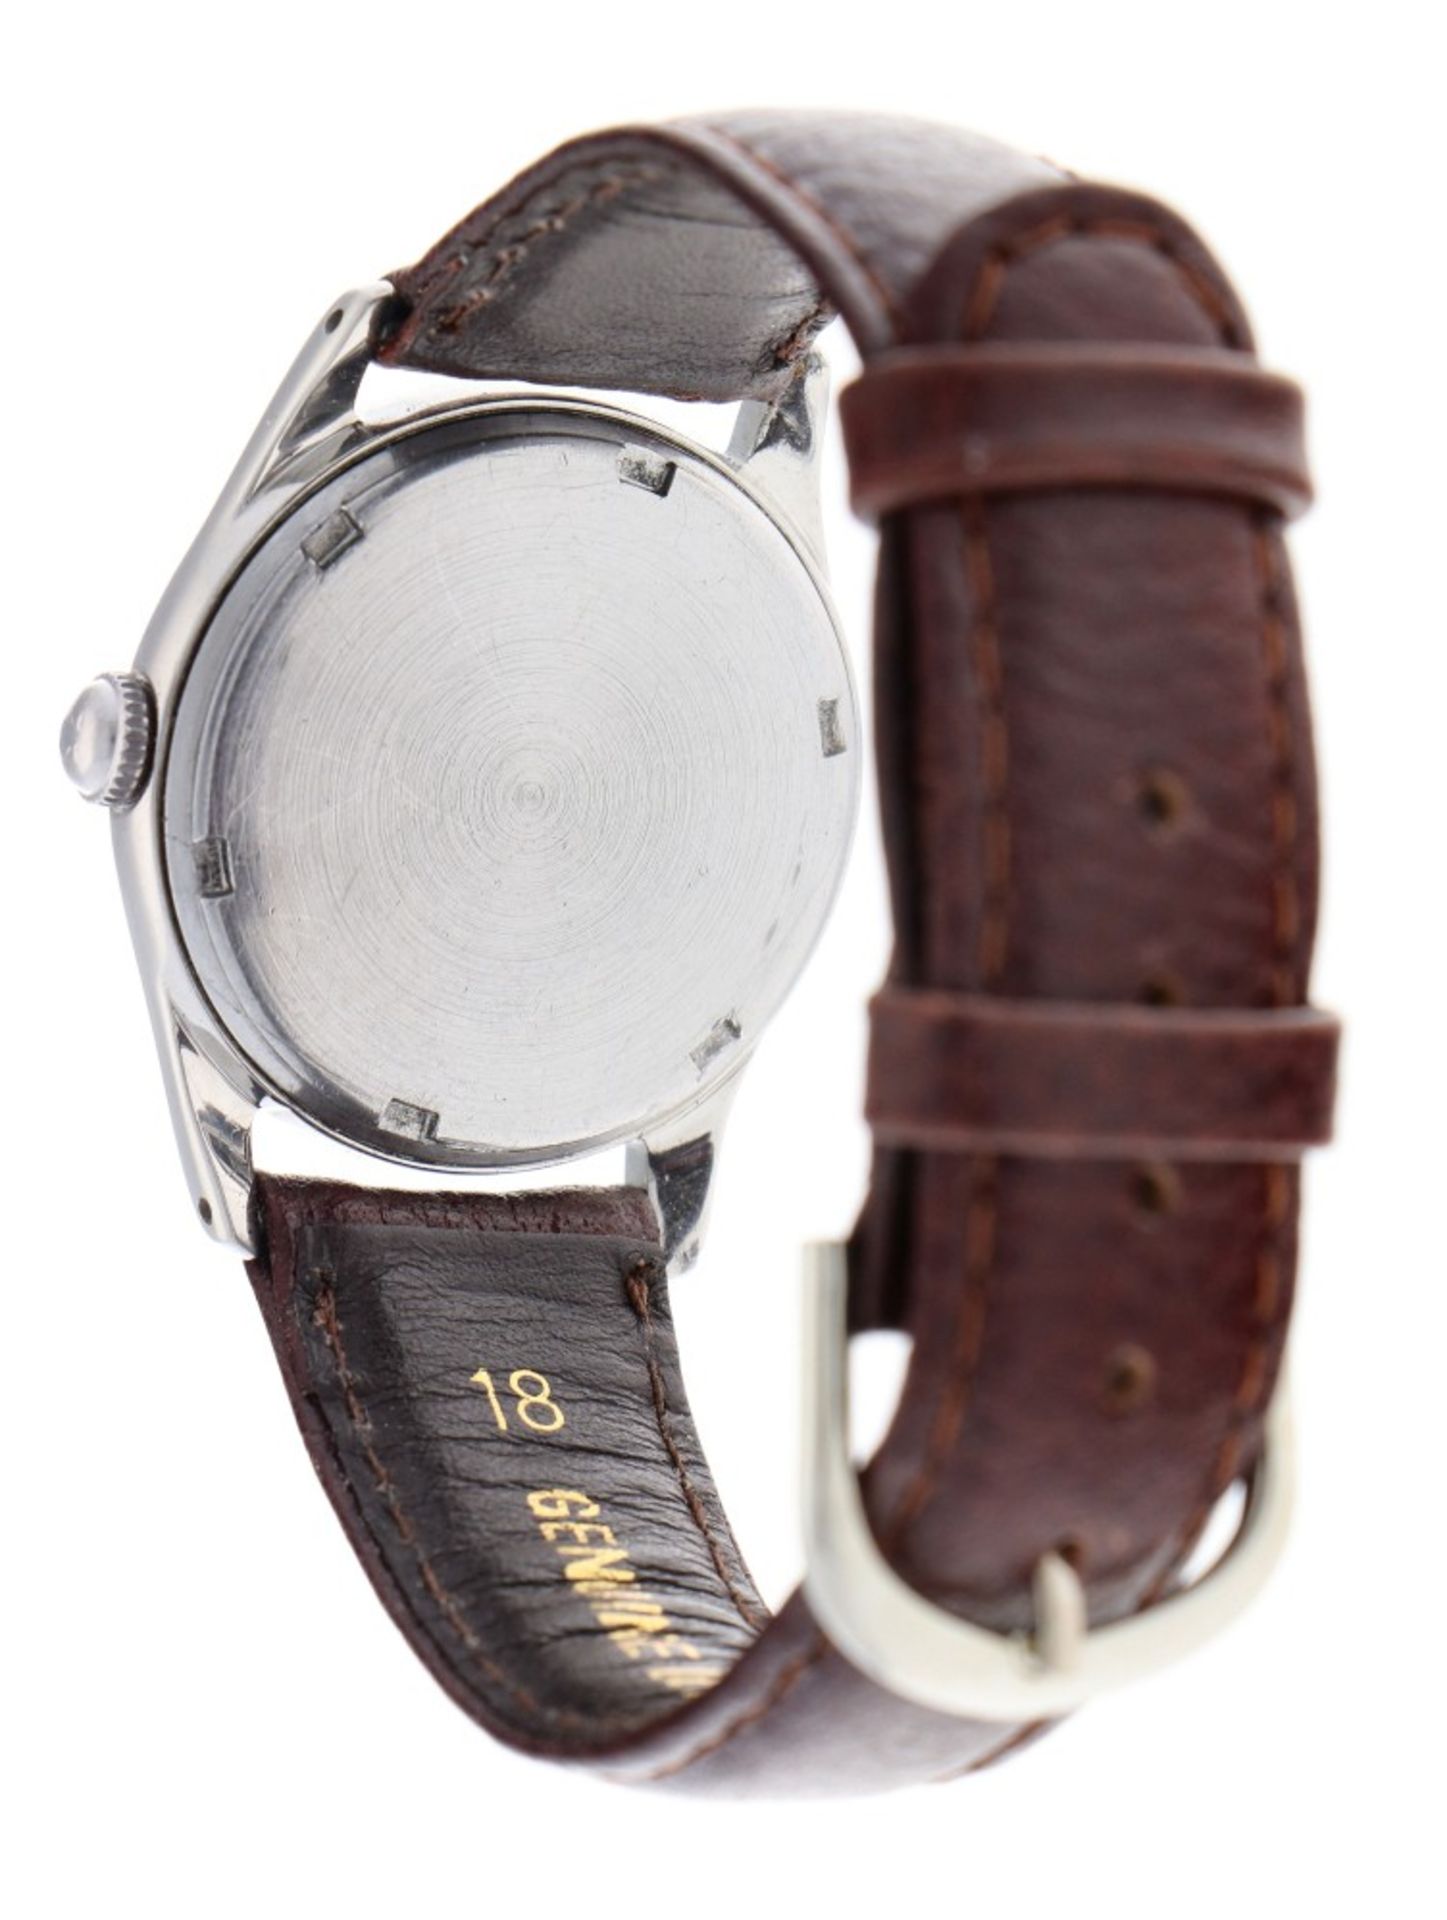 Omega 2690 SC - Men's watch - ca. 1952 - Image 3 of 7